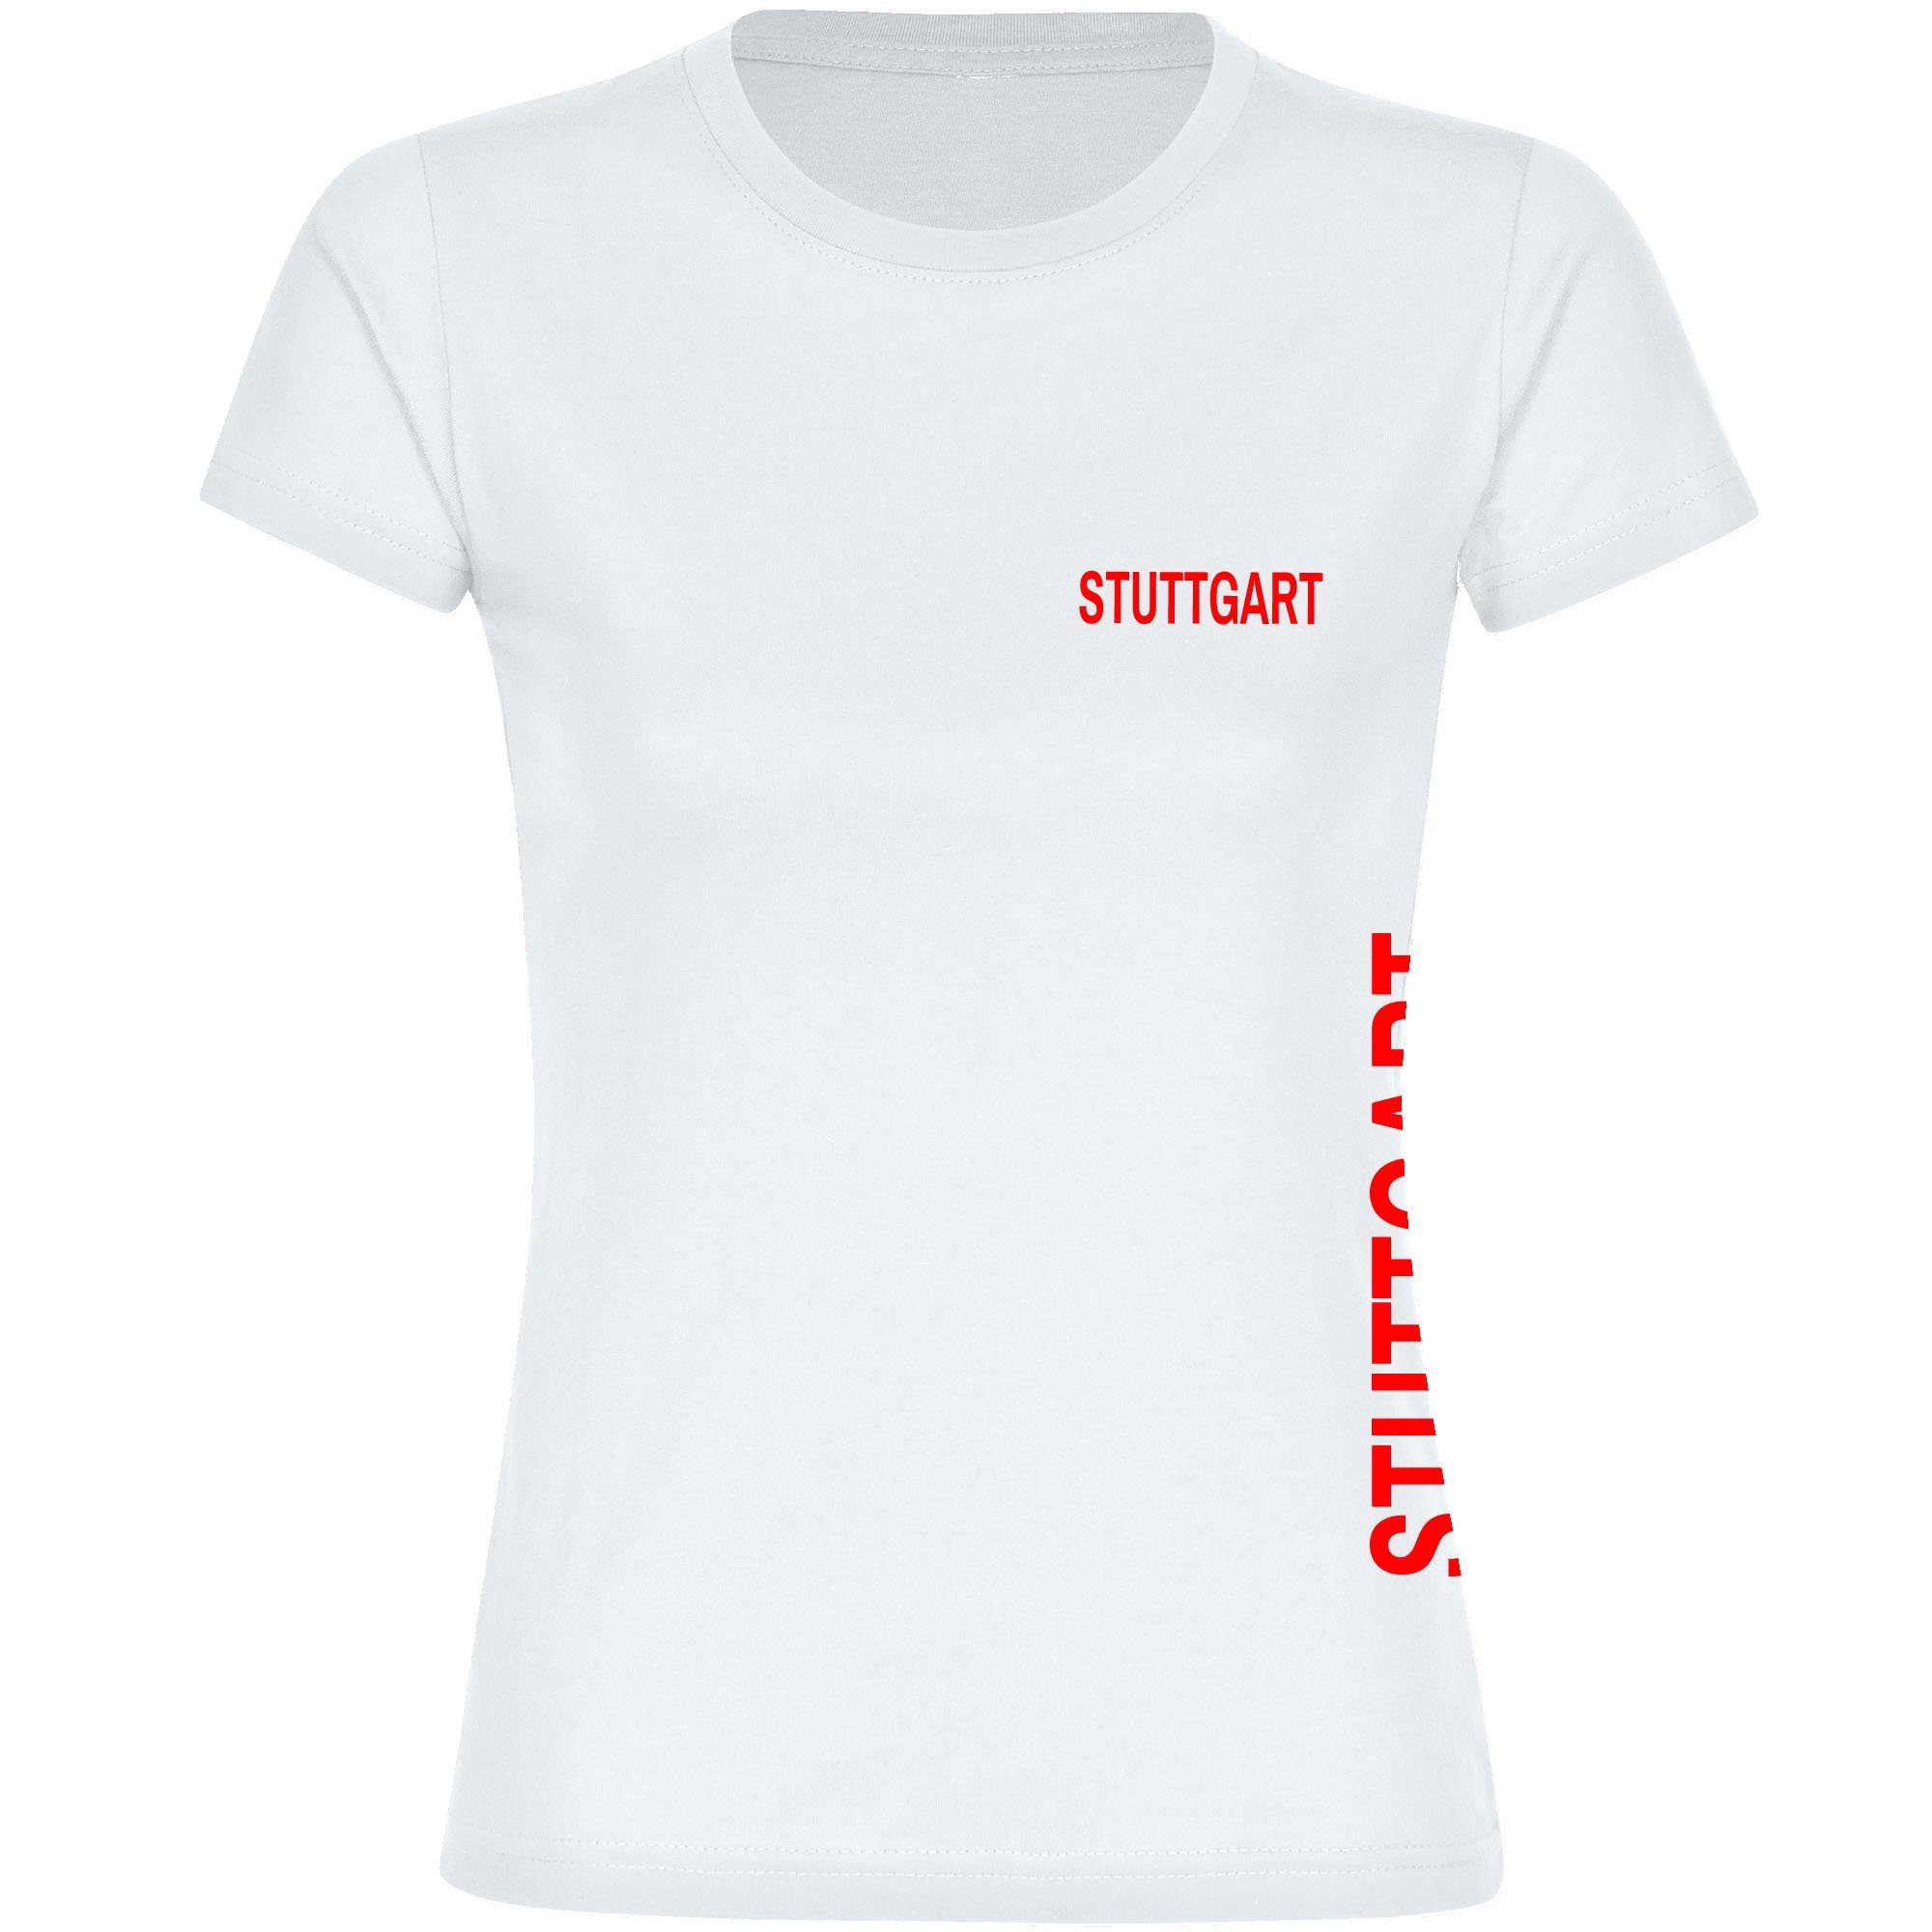 multifanshop T-Shirt Damen Stuttgart - Brust & Seite - Frauen